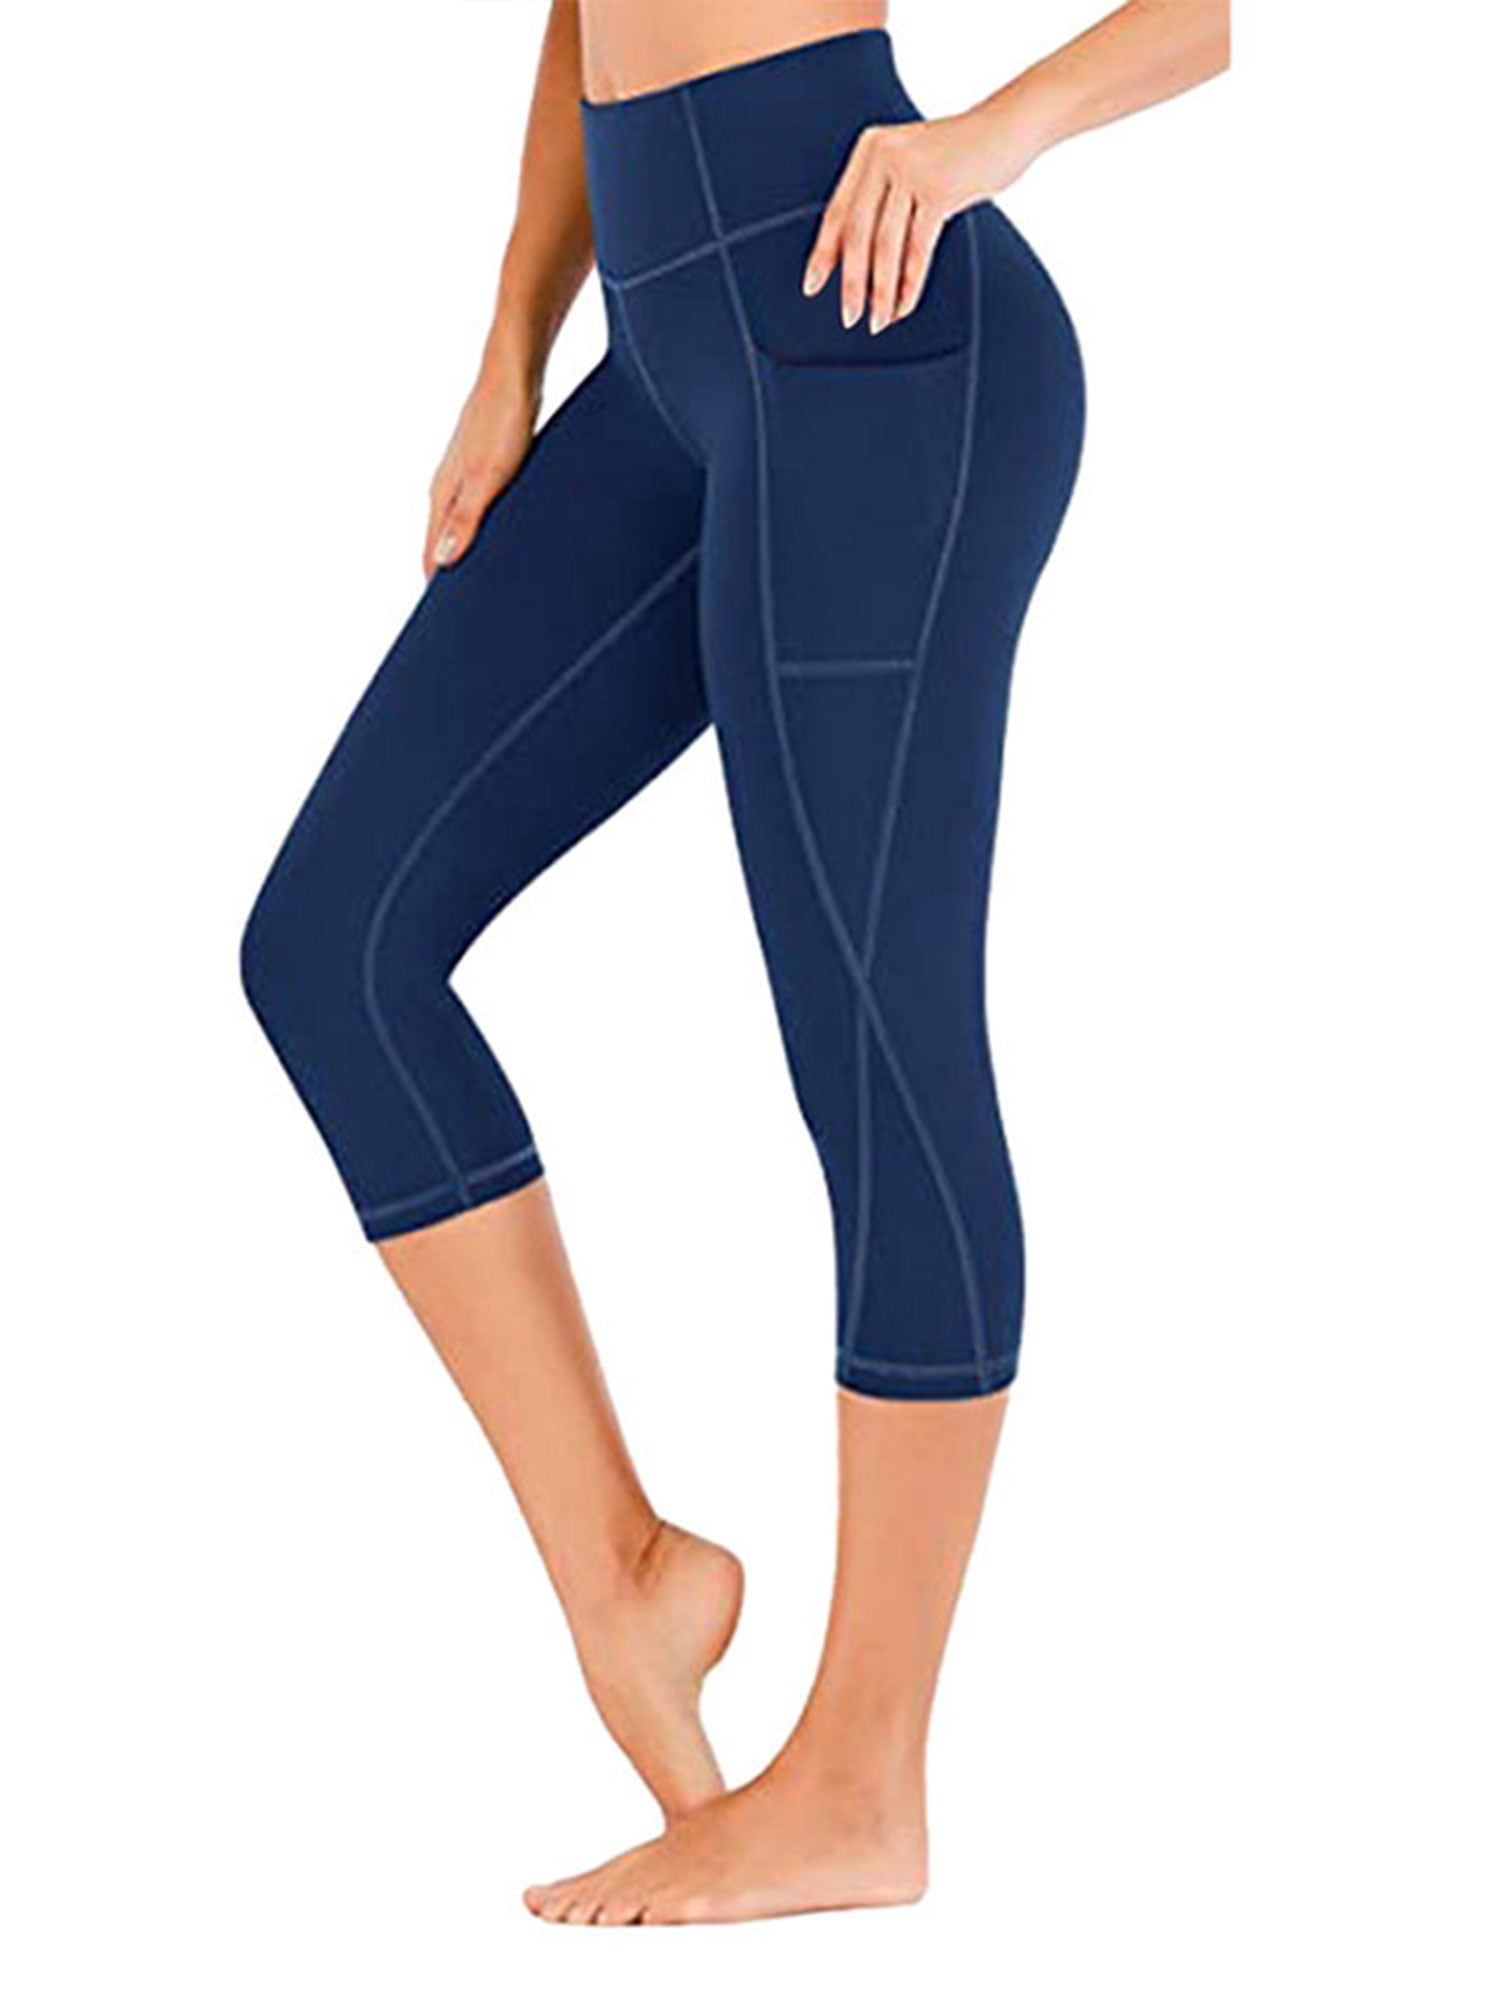 Capri Leggings High Wast Tummy Control Workout Yoga Pant Tights Women 